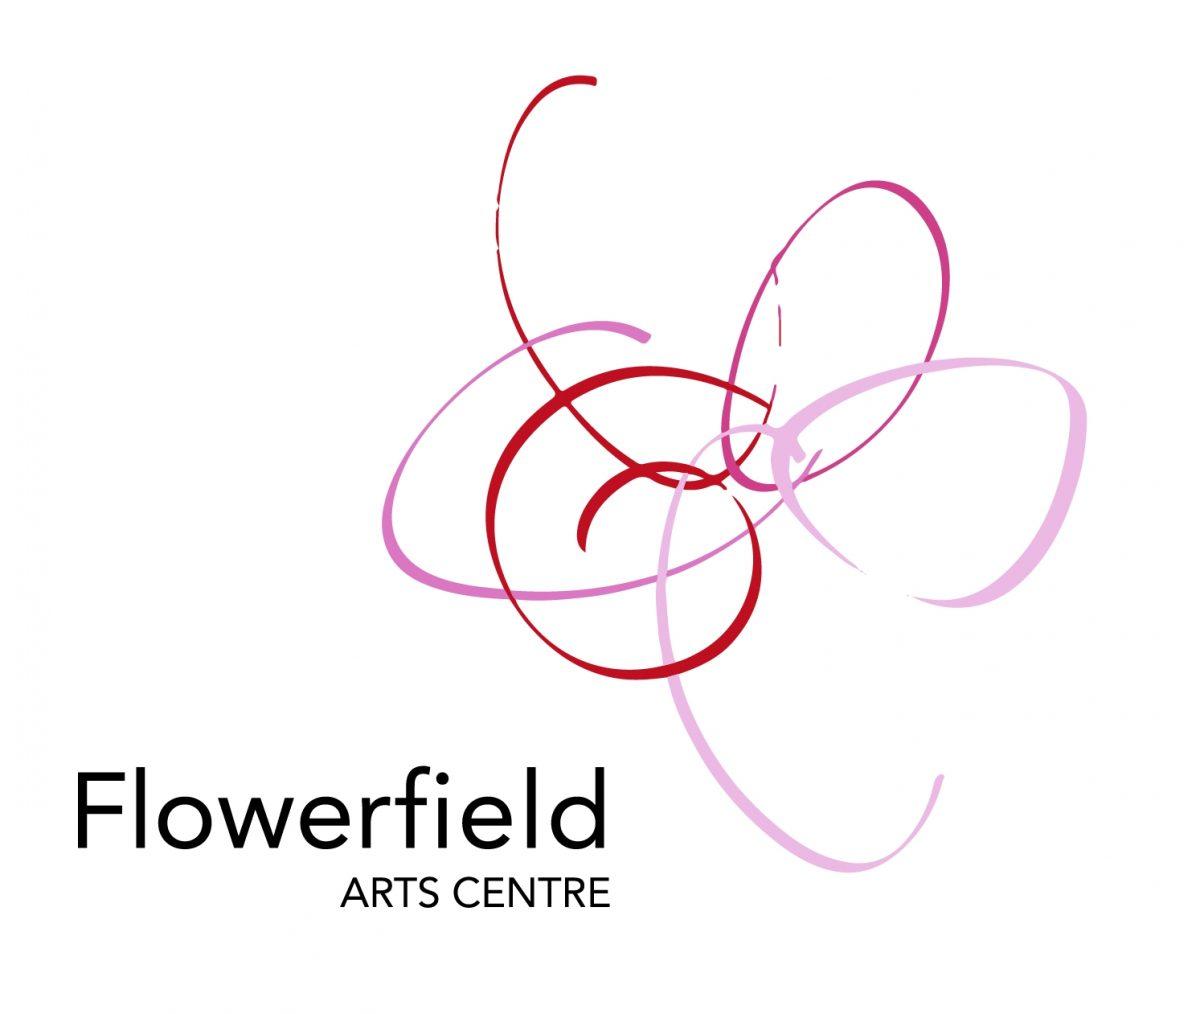 Flowerfield Arts Centre